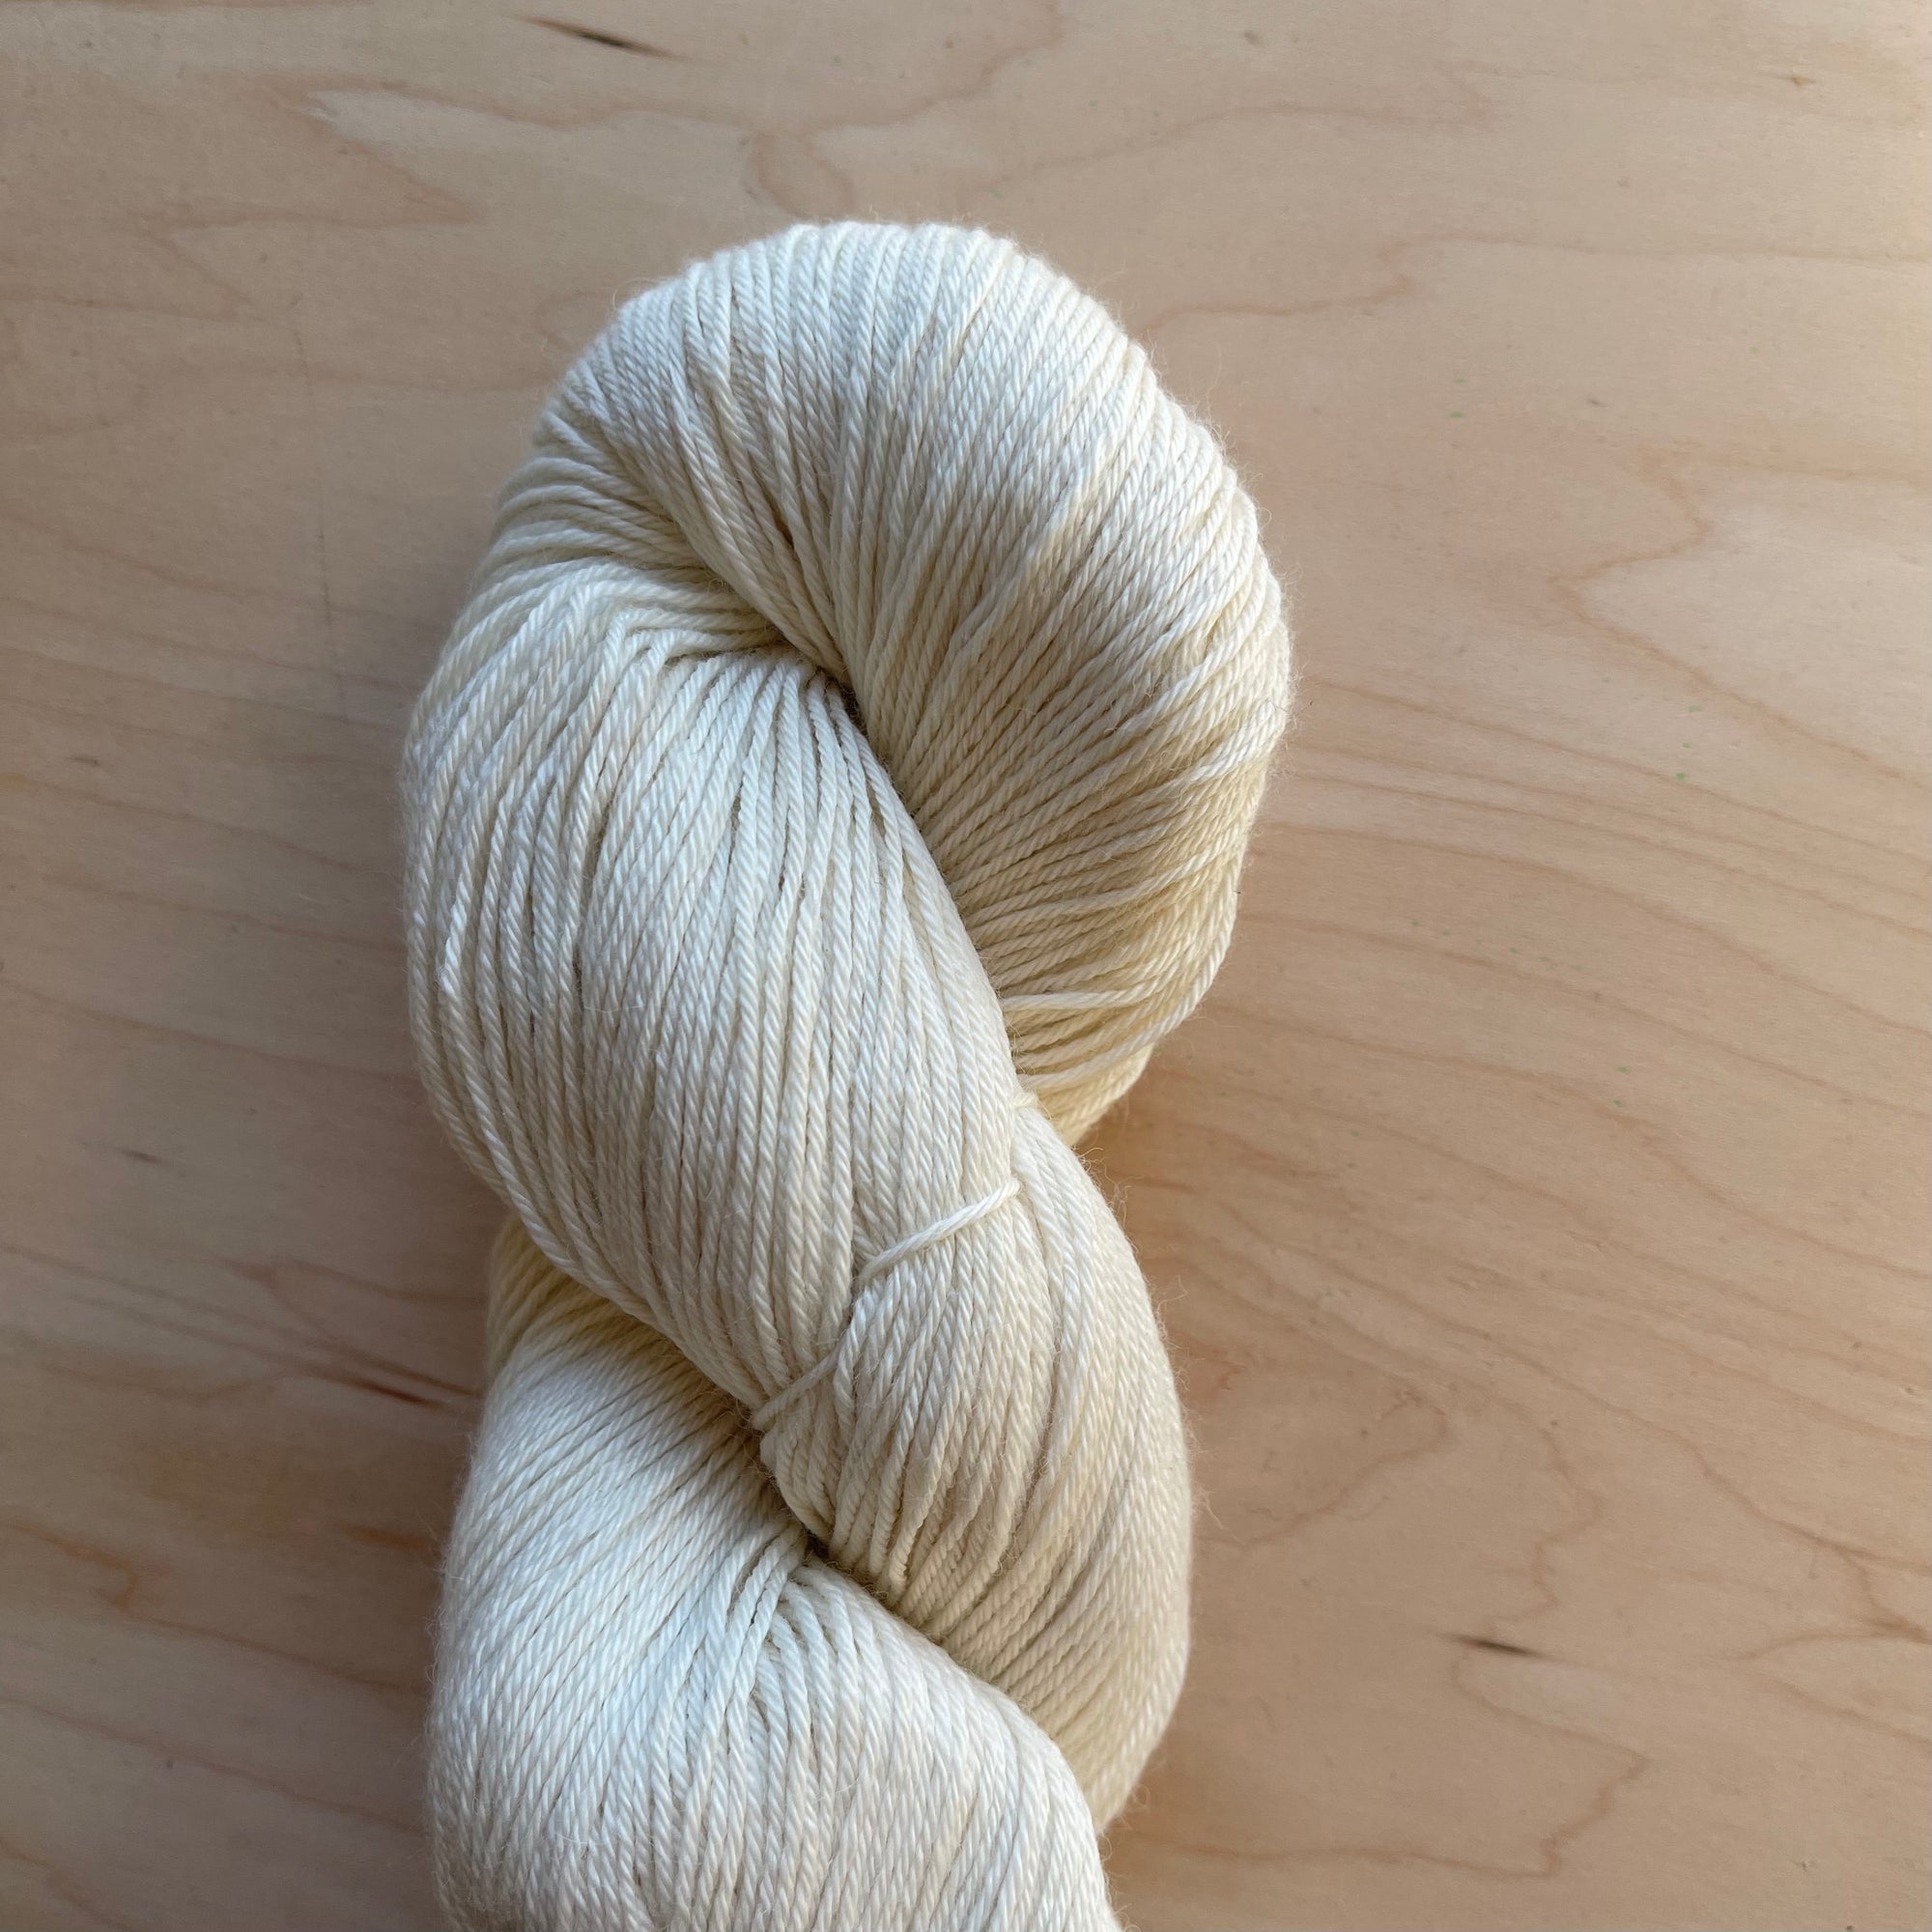 Ivory - Merino Alpaca and Silk Blend - 100g - GATHER Textiles Inc.